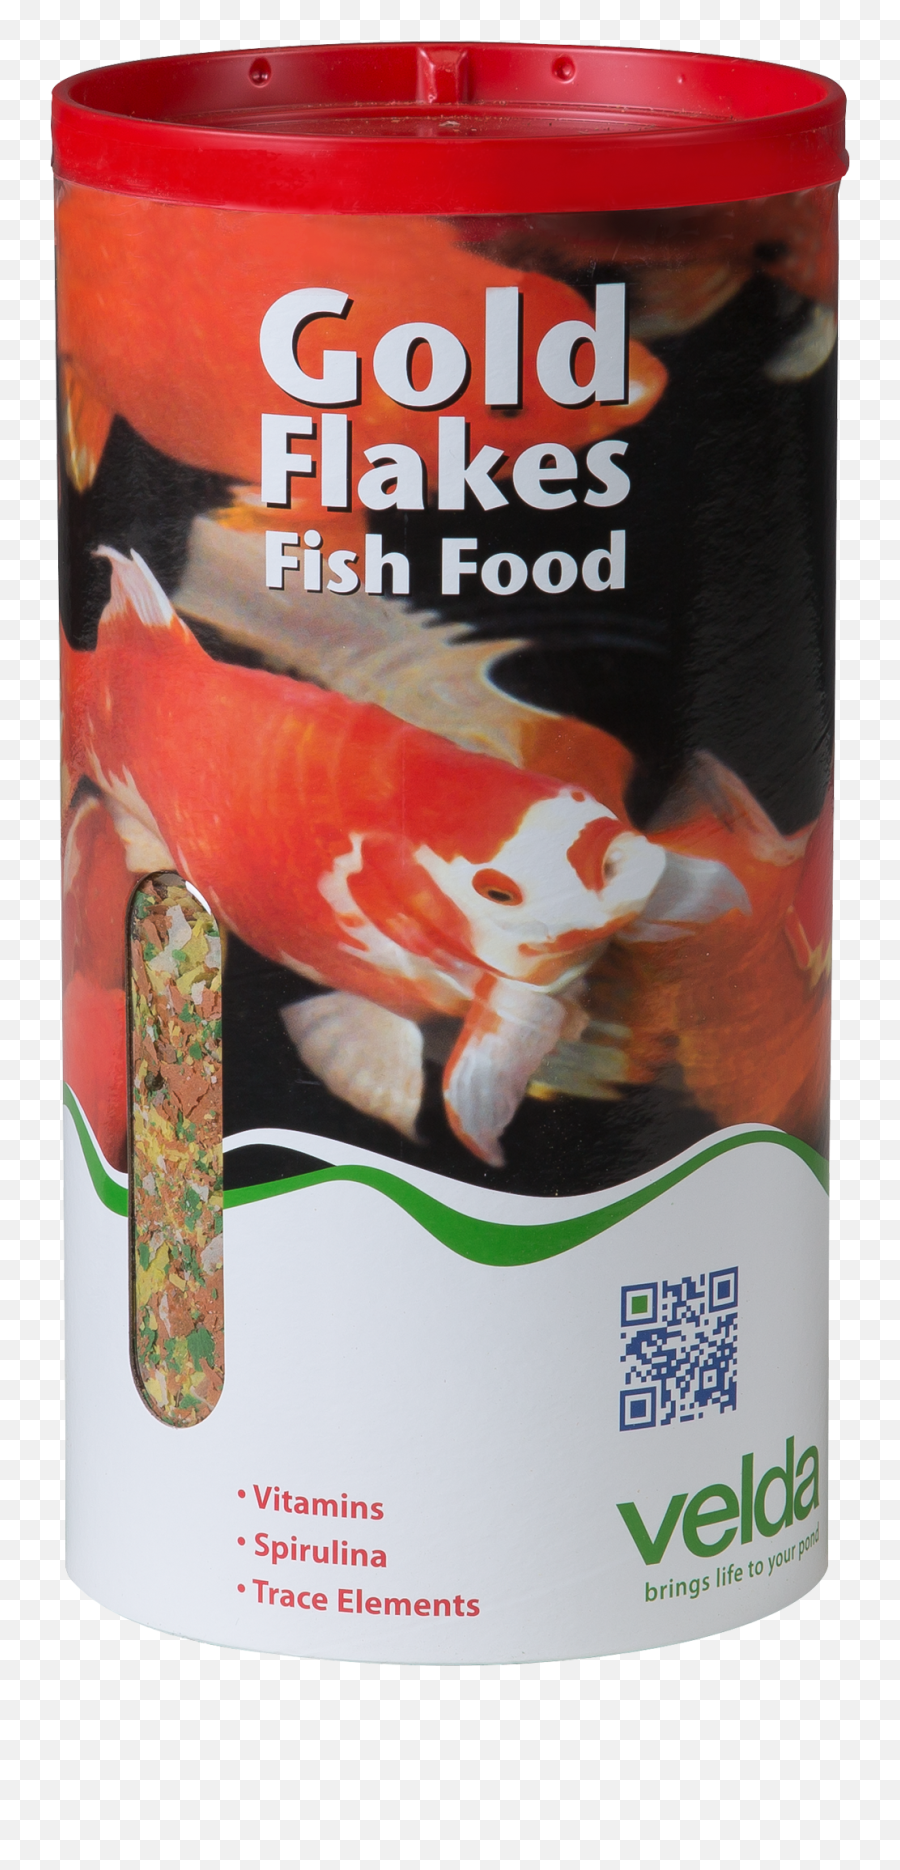 Gold Flakes Fish Food - Gold Flake Fish Food Png,Gold Flakes Png